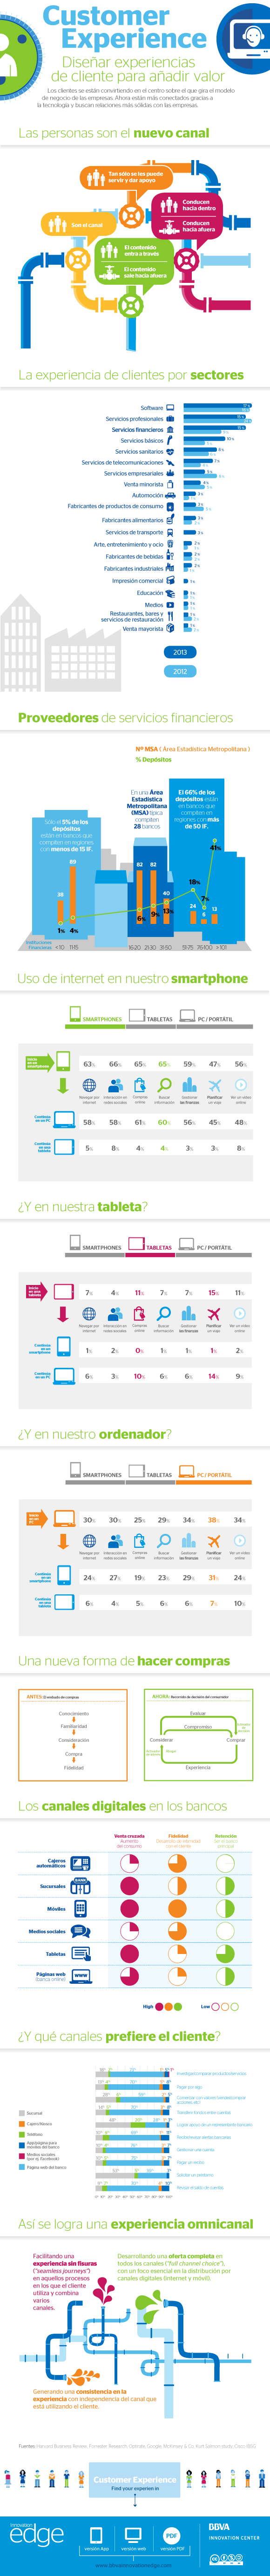 infografia-customer_experience-version-web-bbva